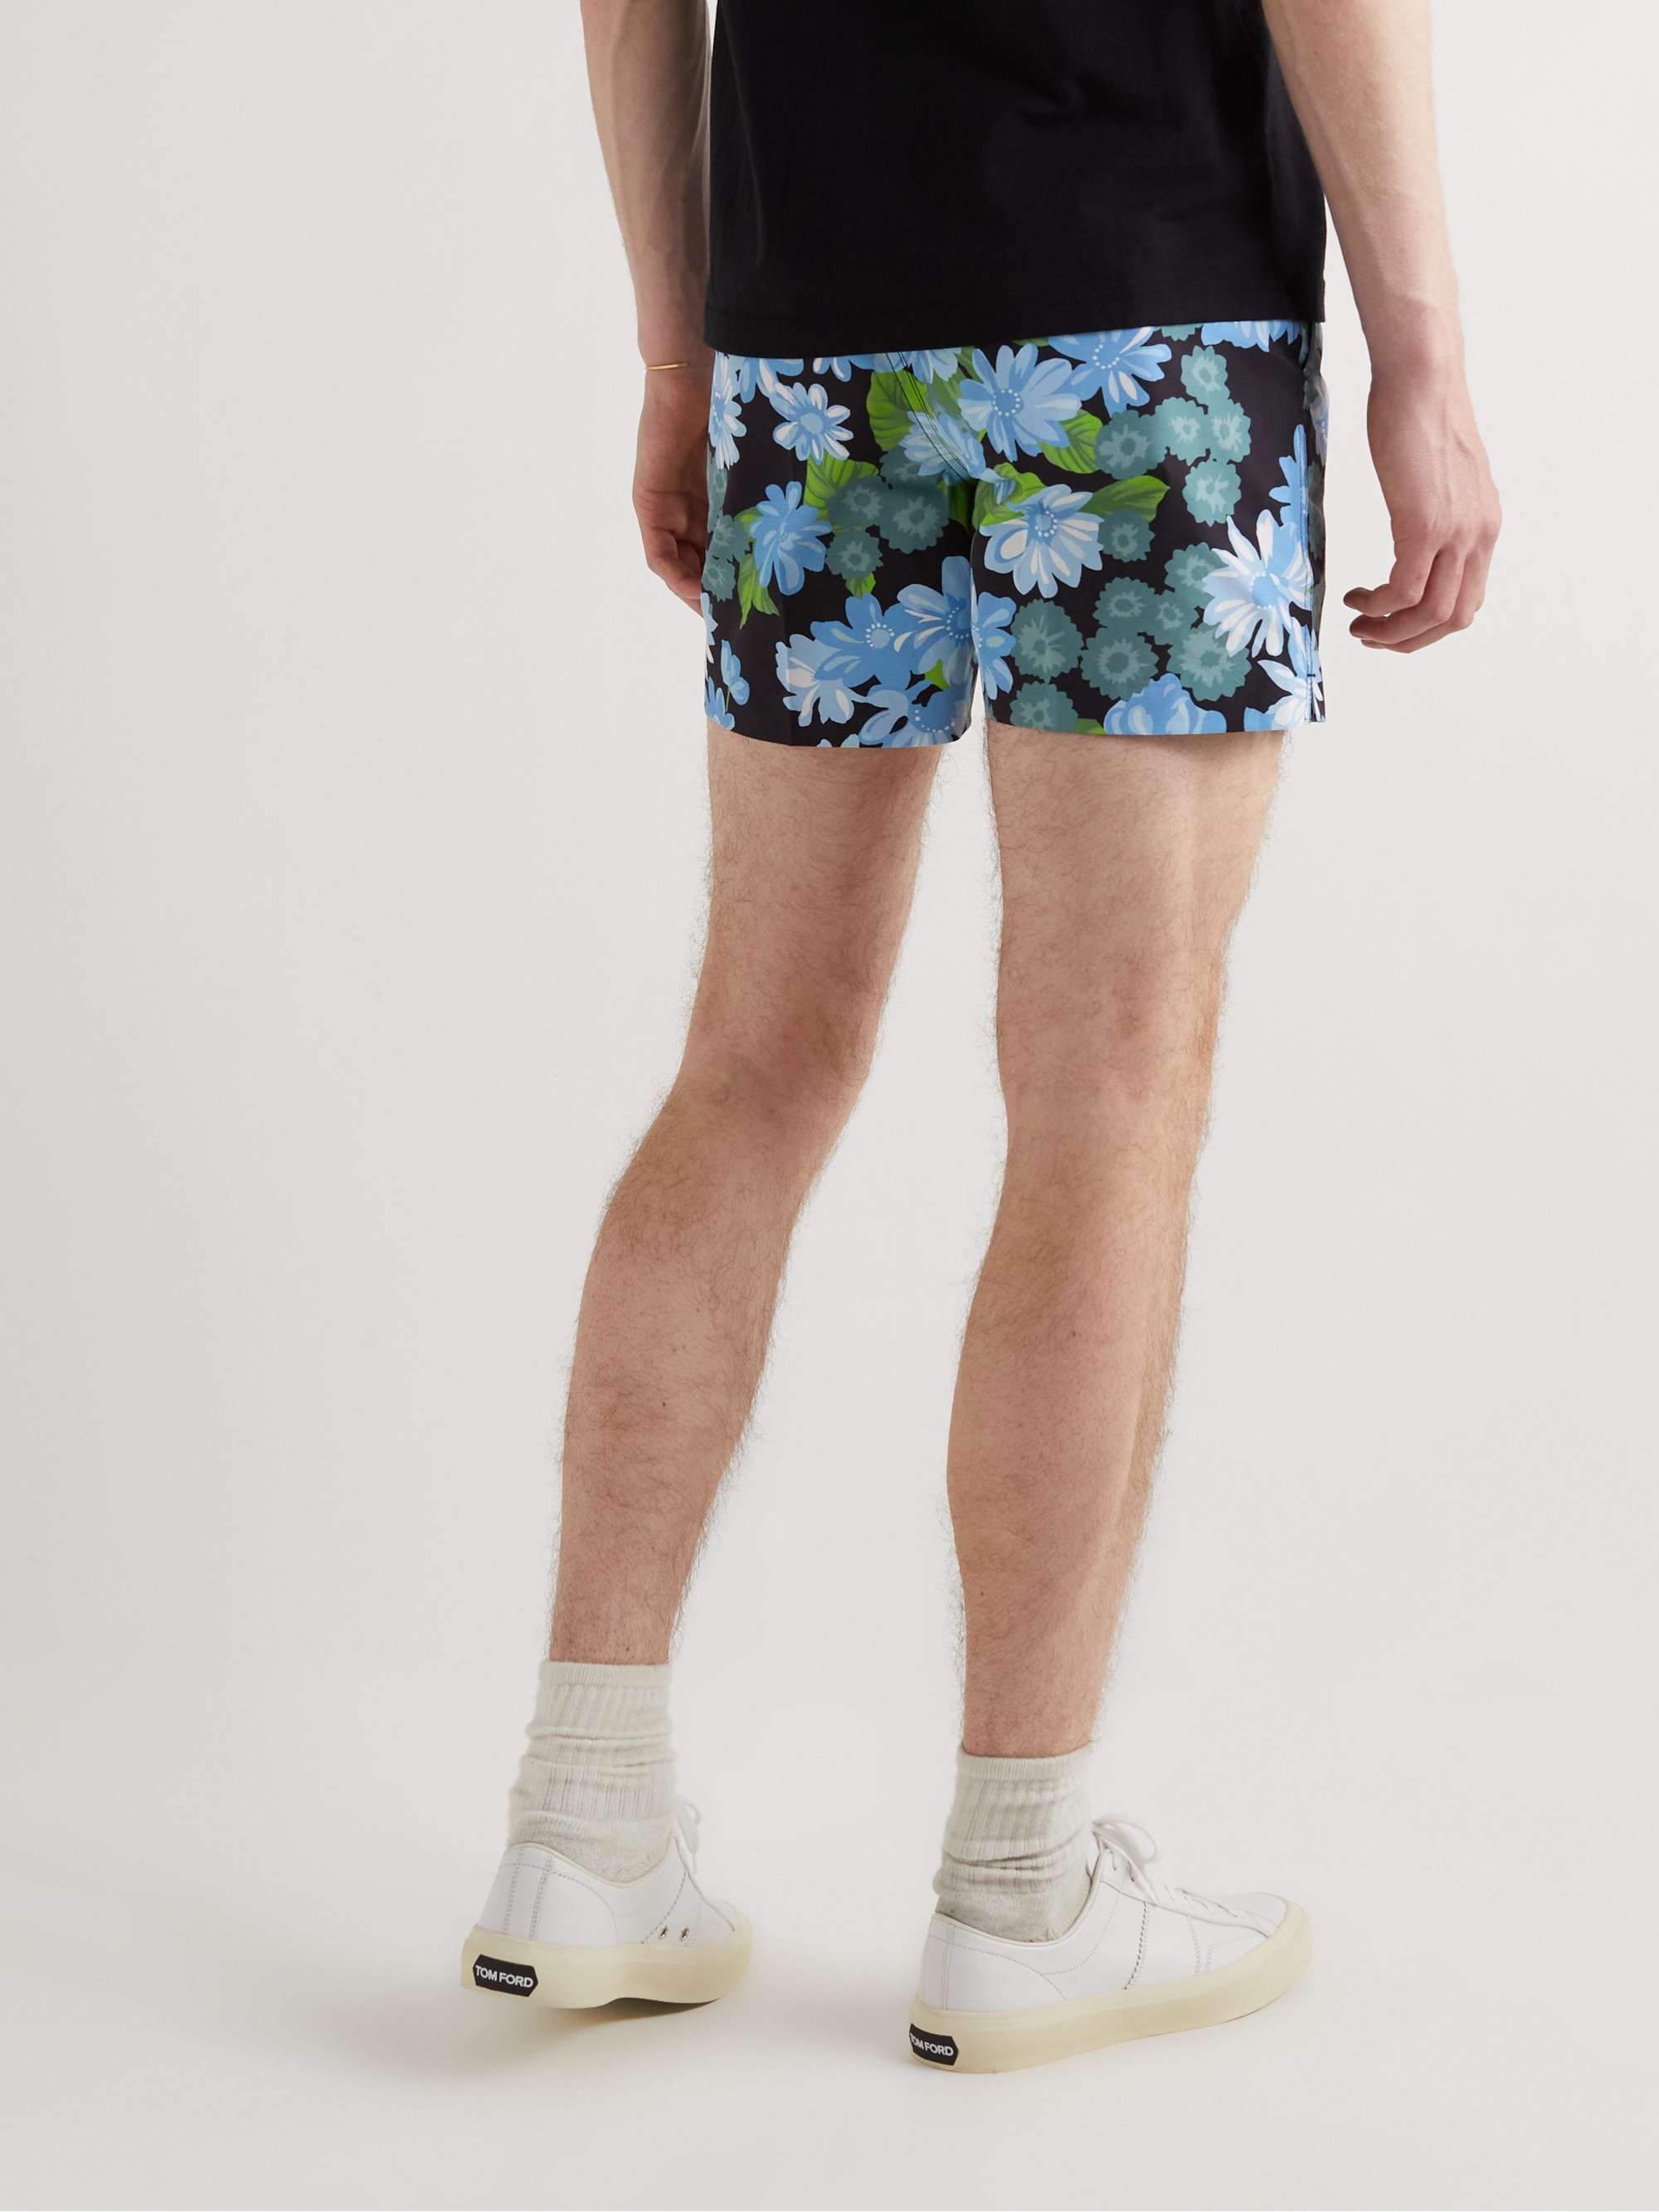 TOM FORD Straight-Leg Floral-Print Cotton-Blend Shorts